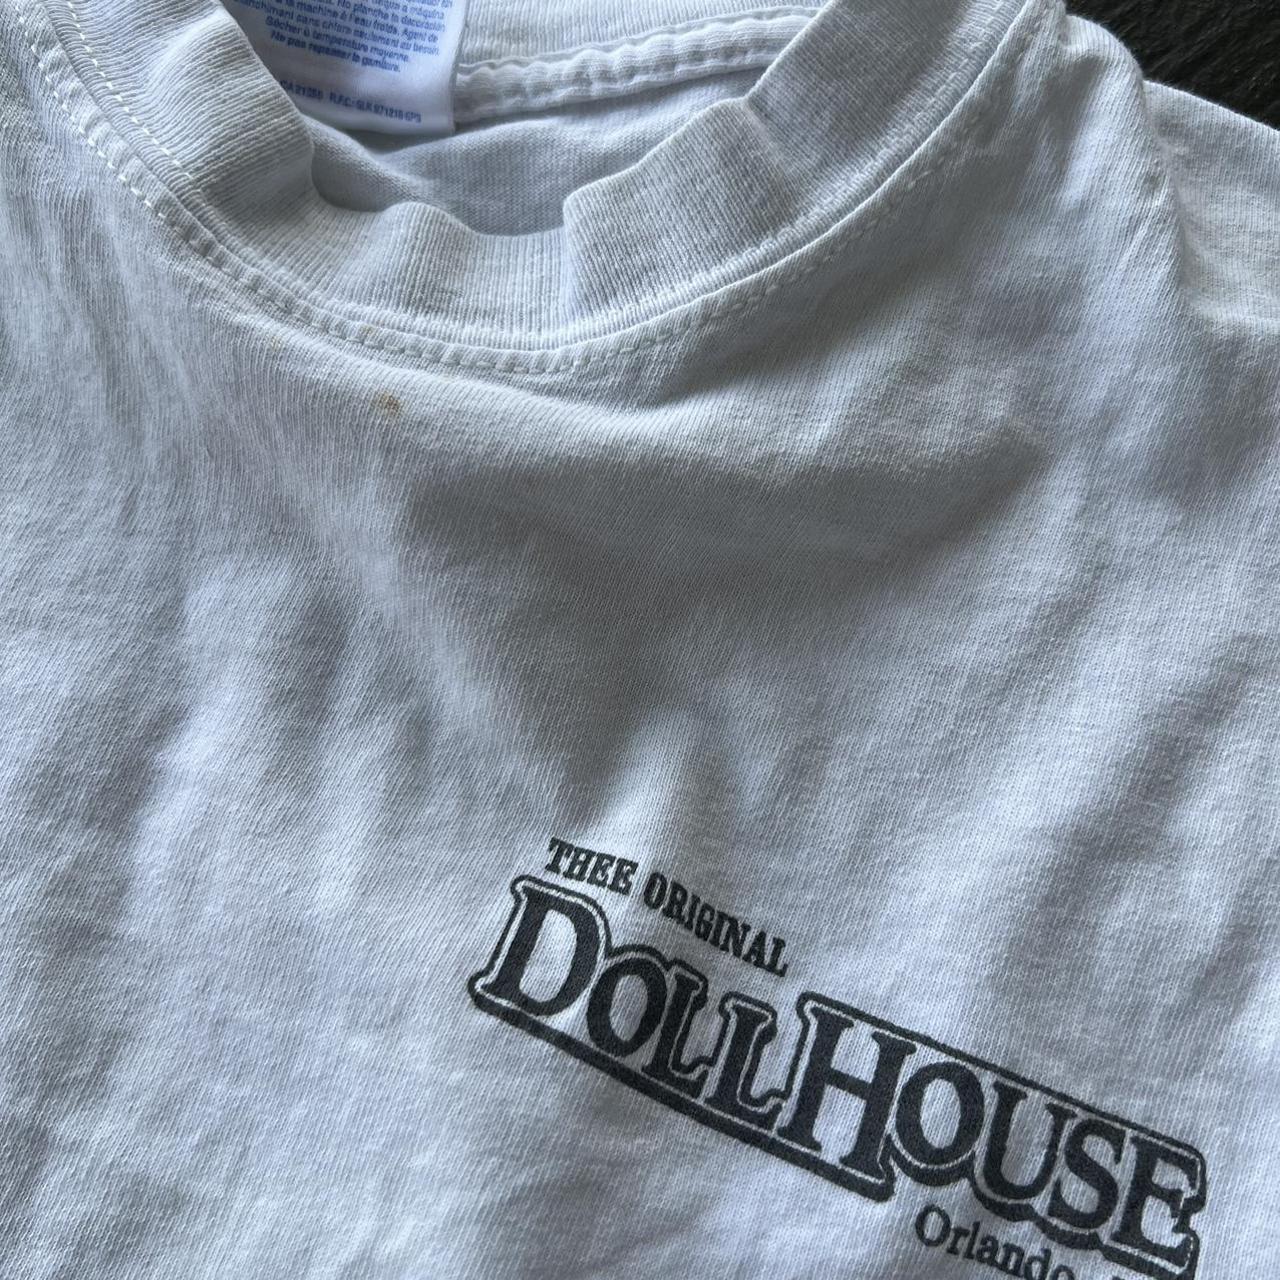 Dollhouse Men's White T-shirt (3)